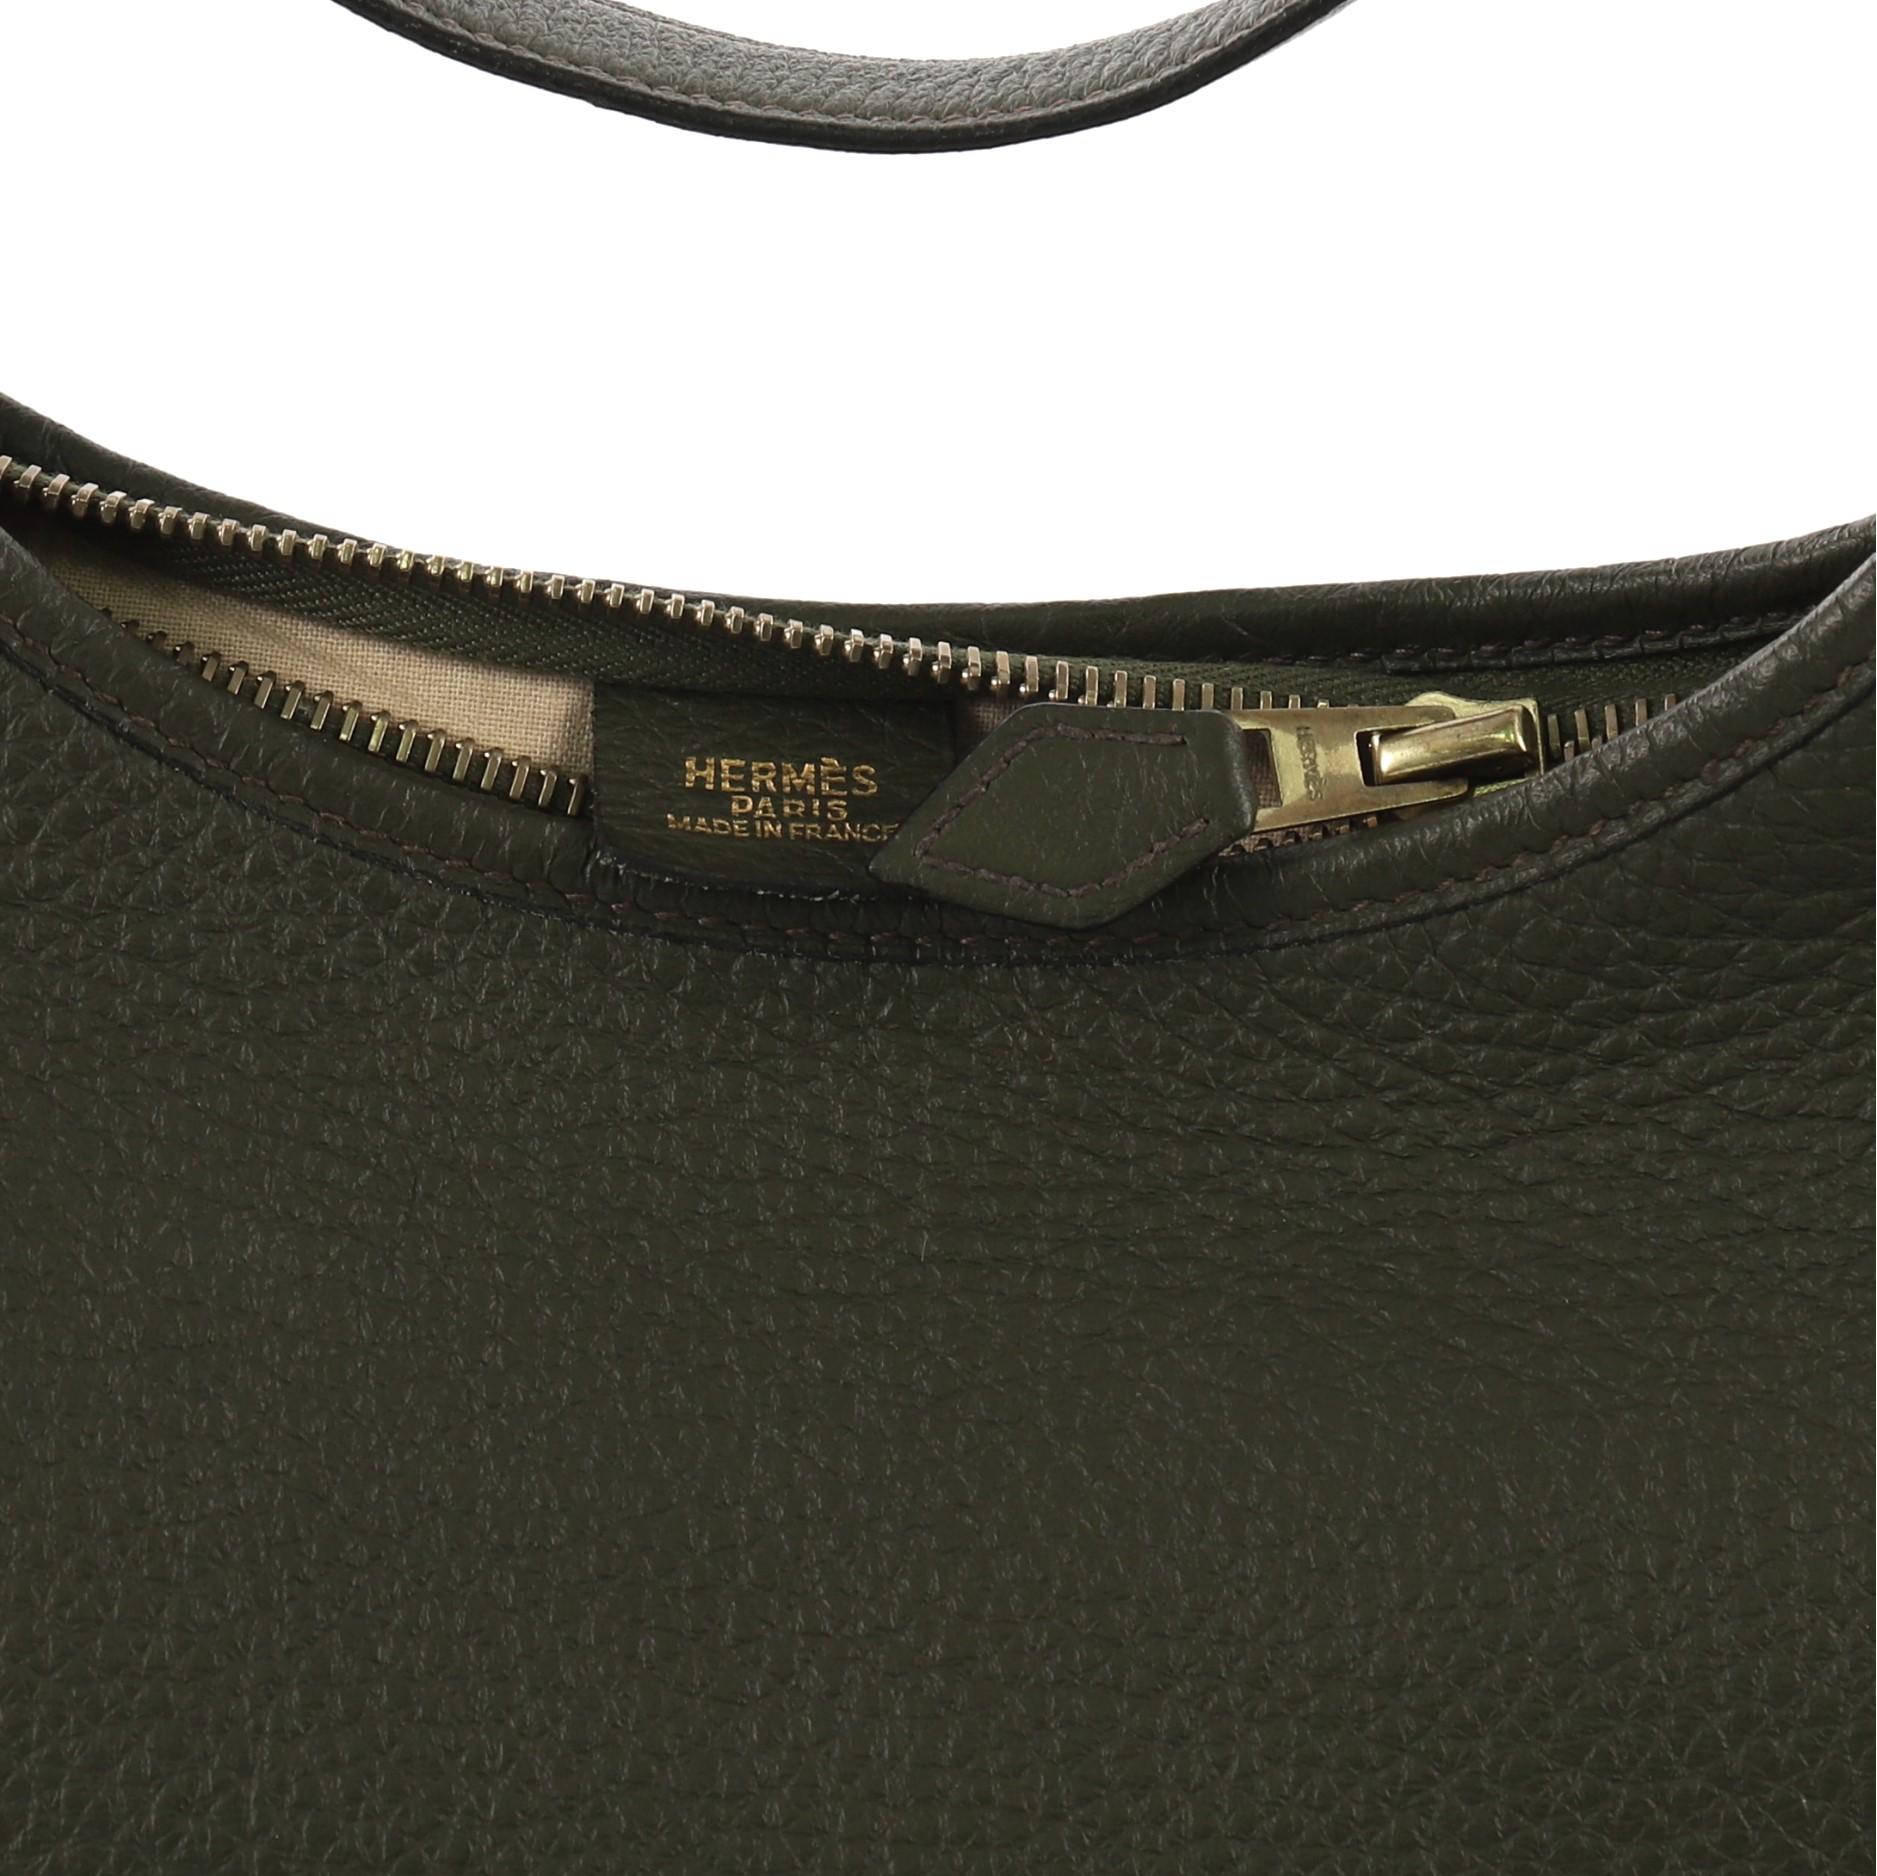  Hermes Gao Bag Leather 2